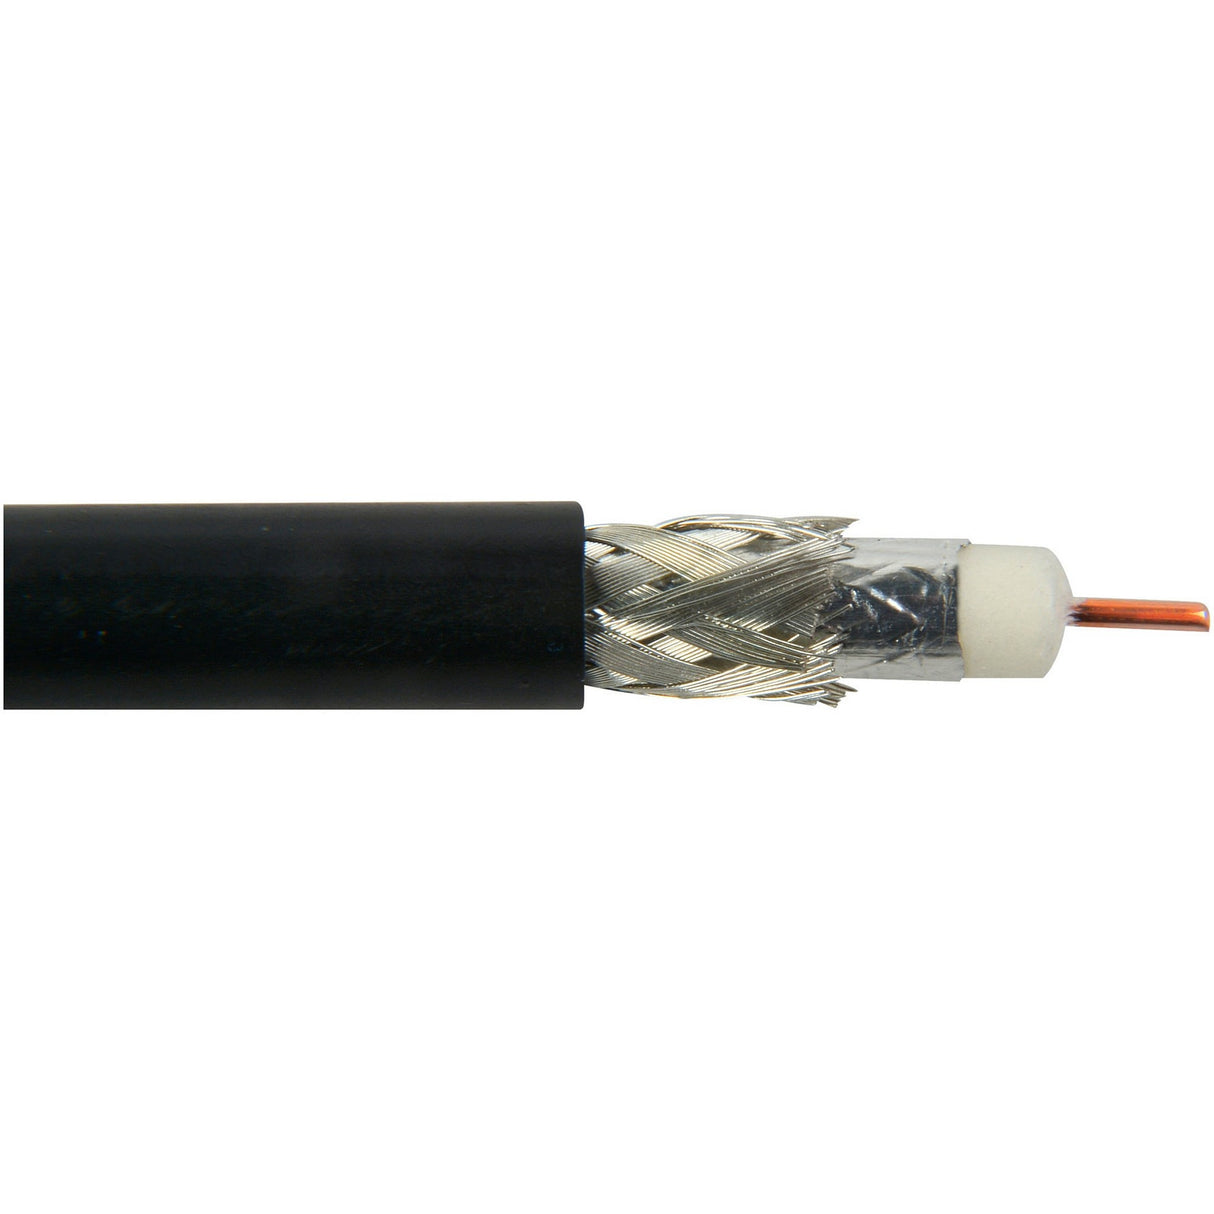 Belden 1694A 0101000 6G-SDI RG6 Digital Coaxial Video Cable 18AWG, Black, 1000-Feet